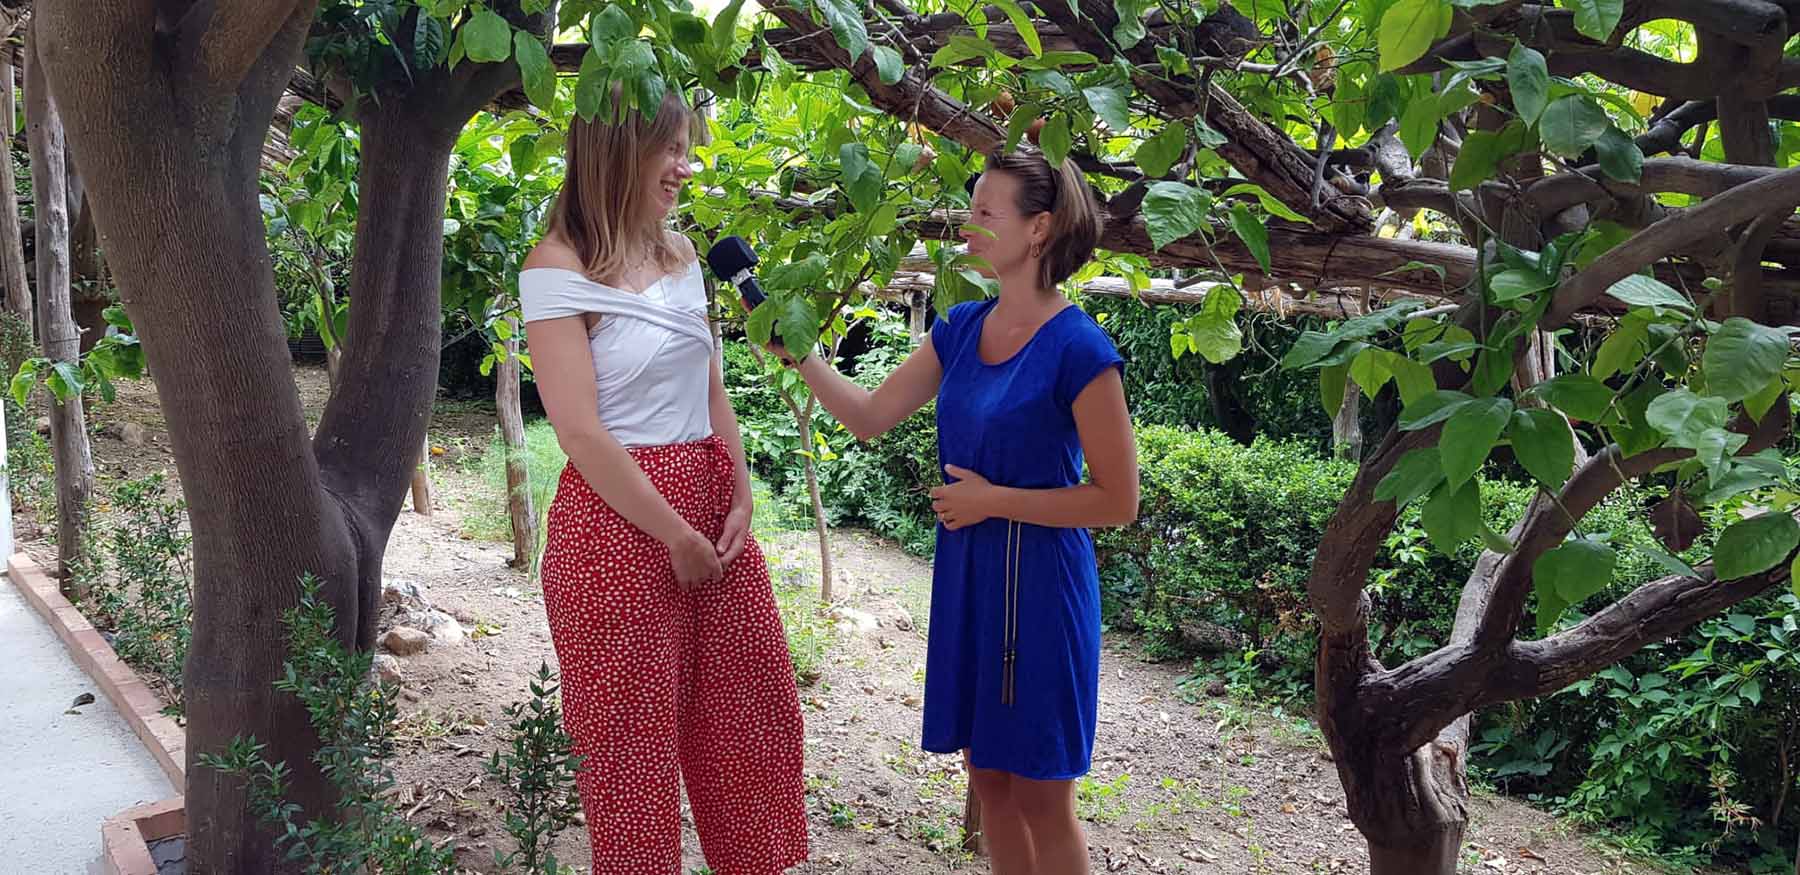 Daniela Wellnitz di Genius Loci Travel intervistata da Sabrina Gander per Listen2ITALIA di ENIT